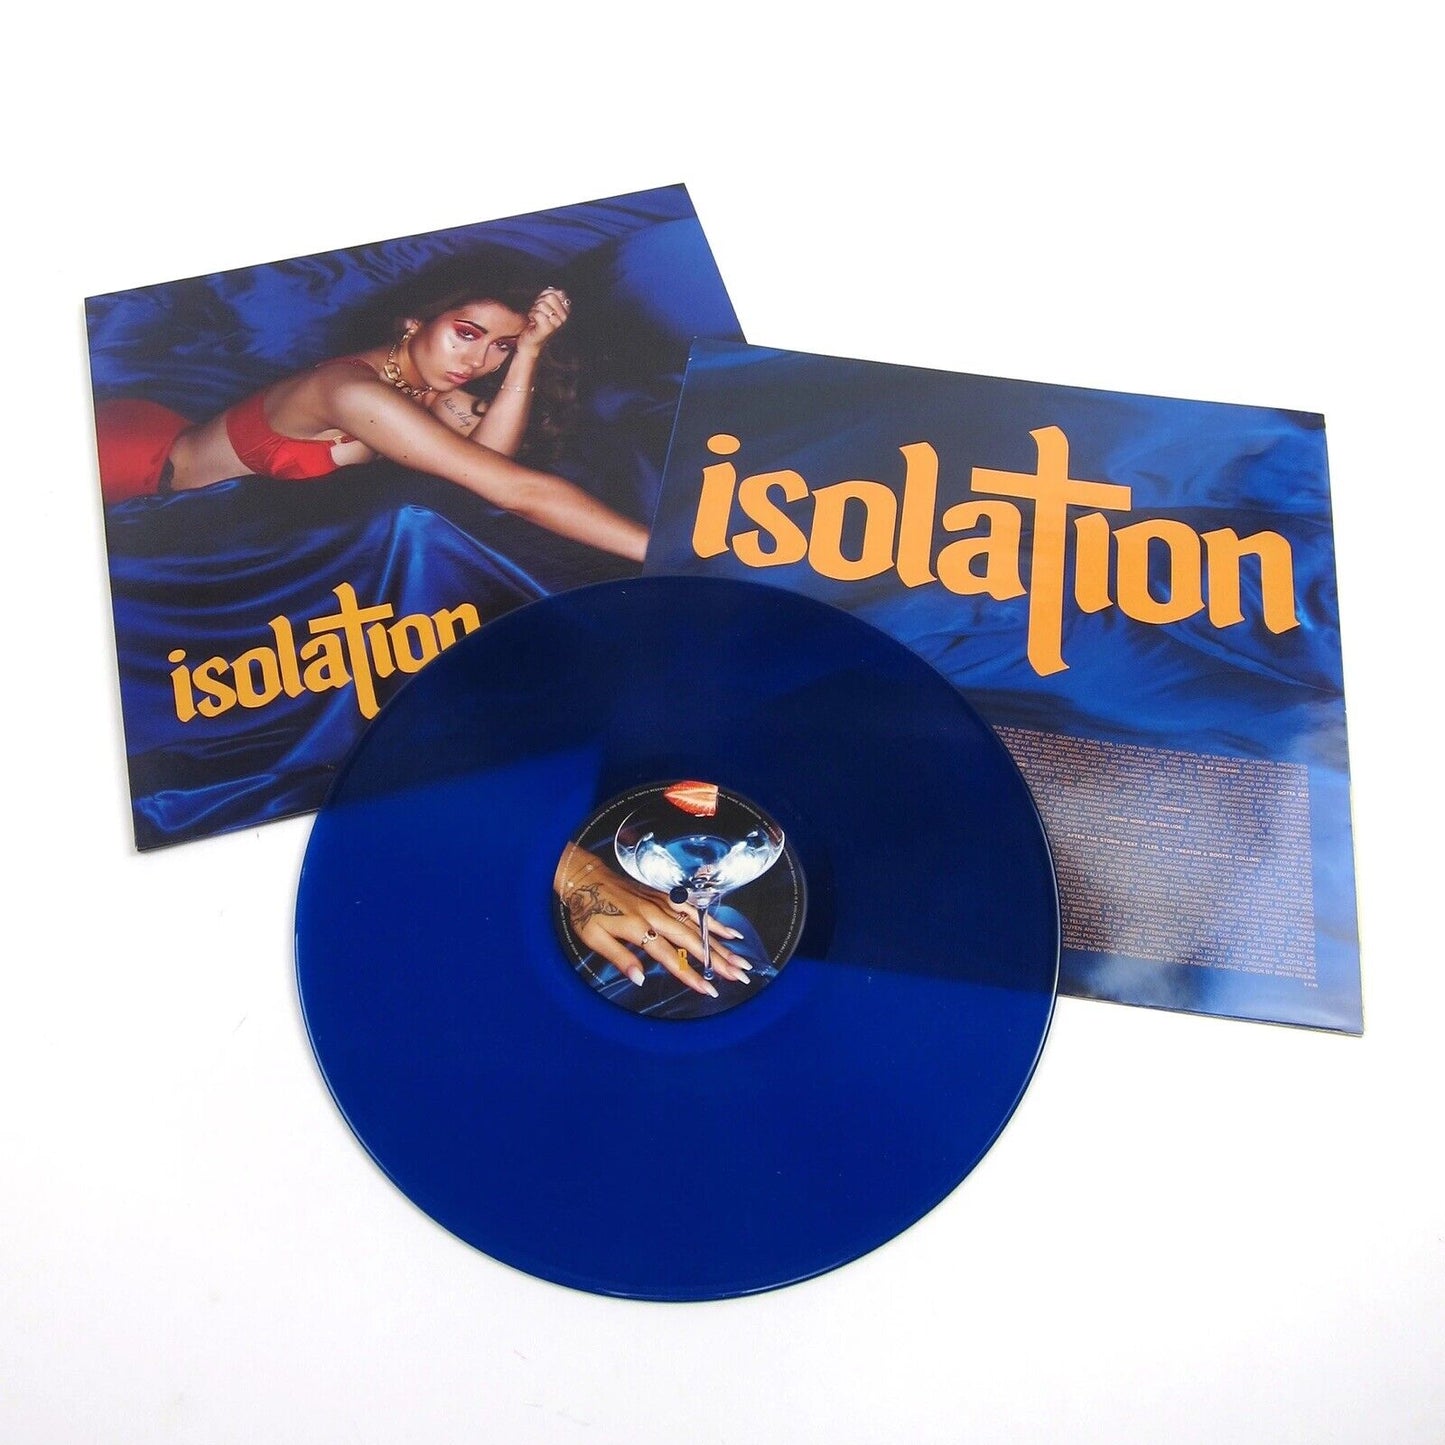 Kali Uchis - Isolation (Blue Jay Vinyl, 5 Year Anniversary)